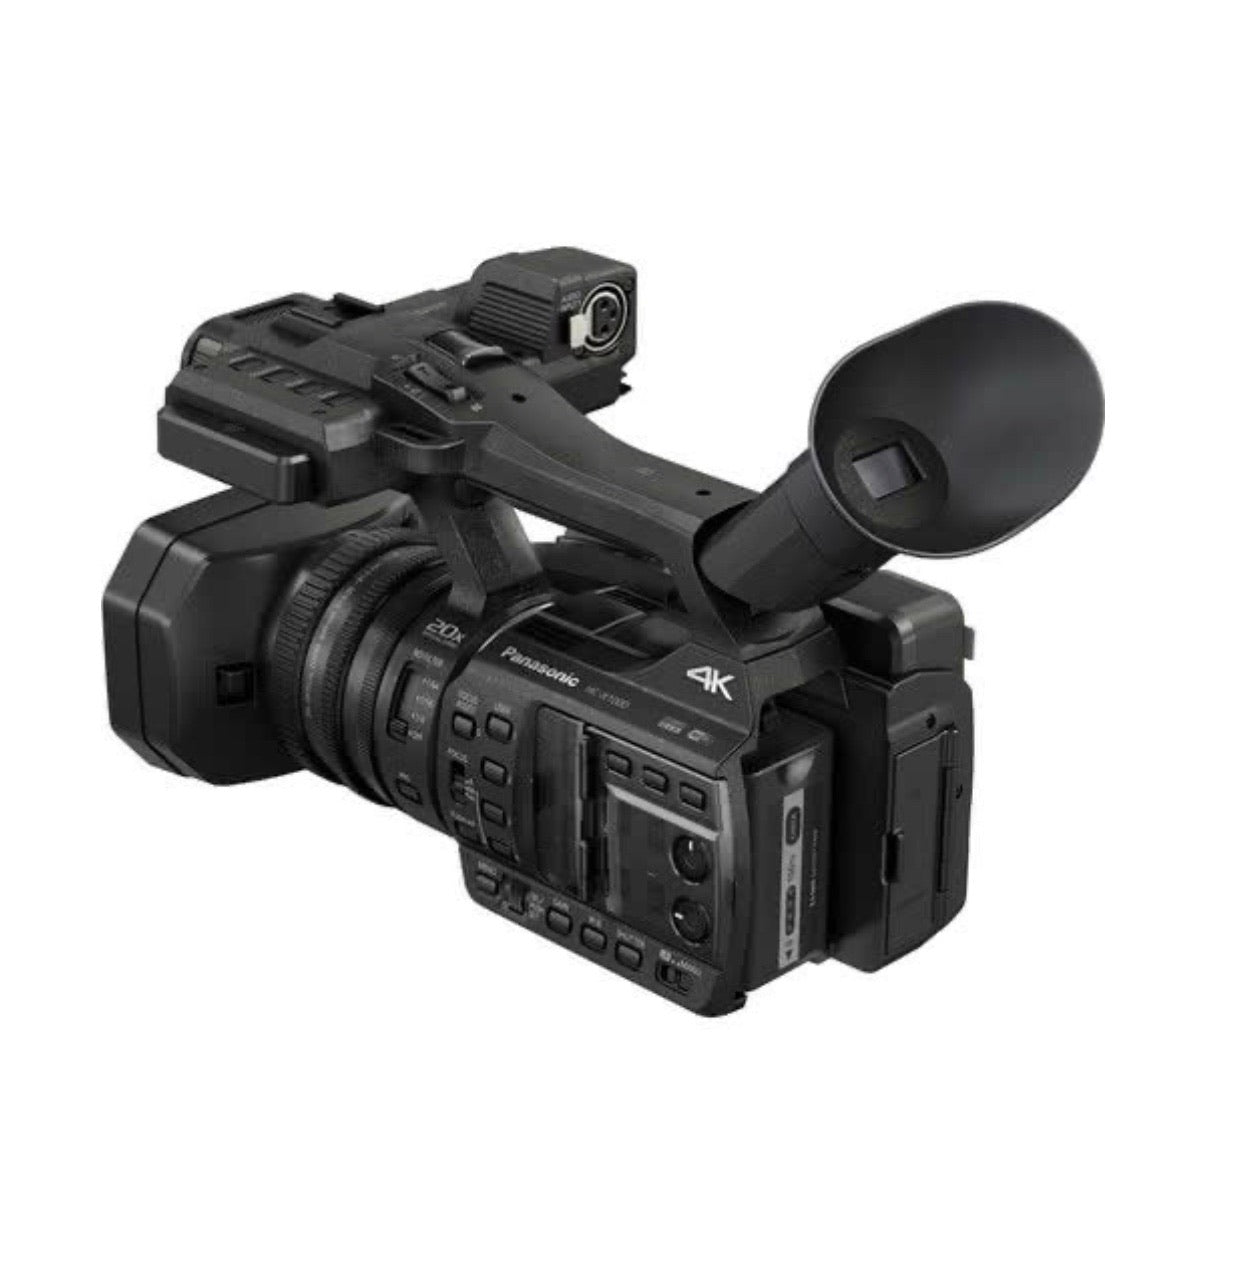 Hire - Video Camera Panasonic  HC-X1000 4K Digital Video Camera